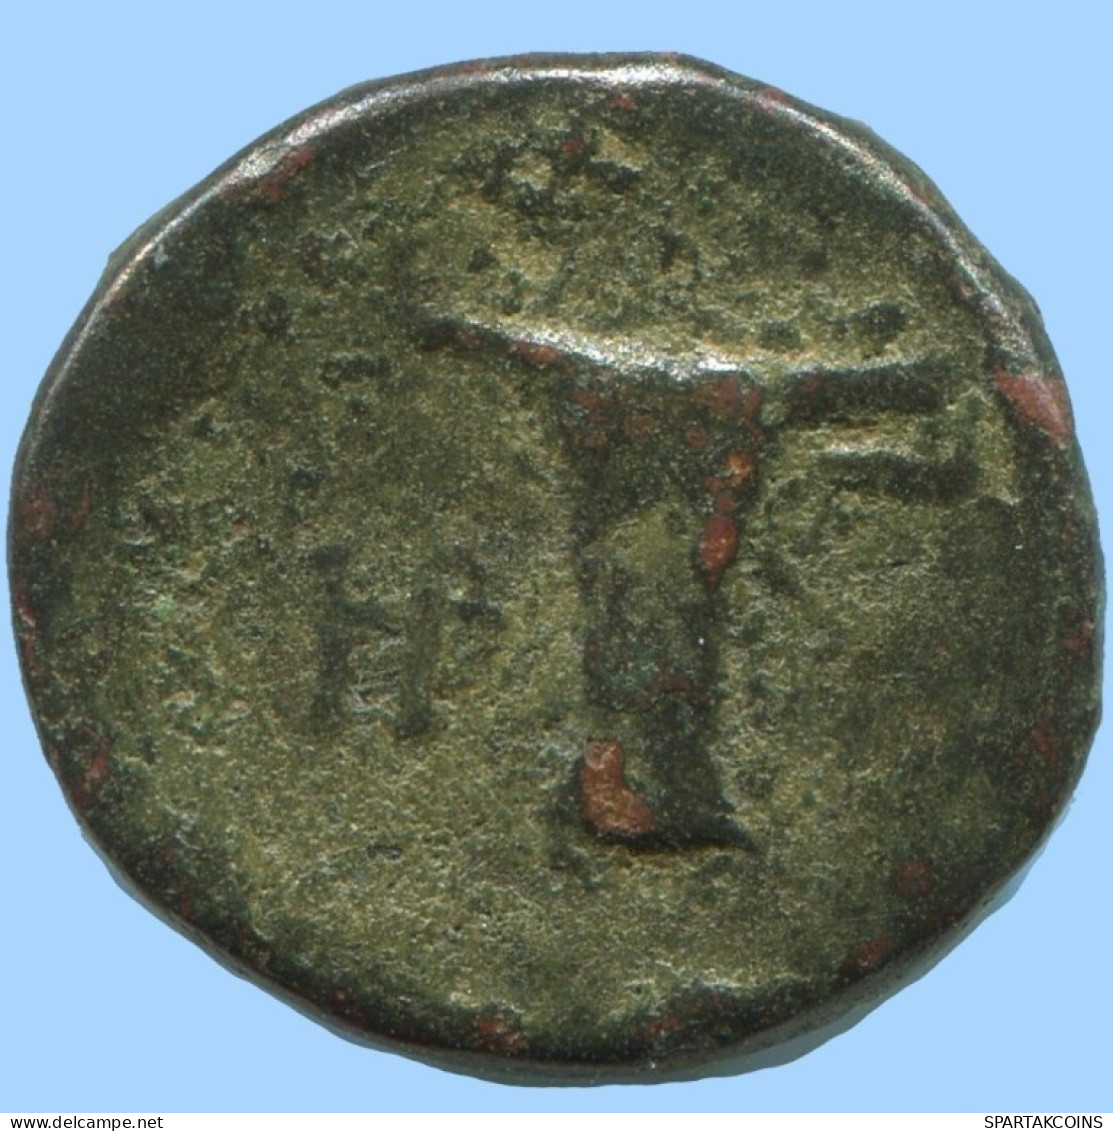 AIOLIS KYME HORSE SKYPHOS Authentic Ancient GREEK Coin 4.7g/18mm #AG028.12.U.A - Griegas